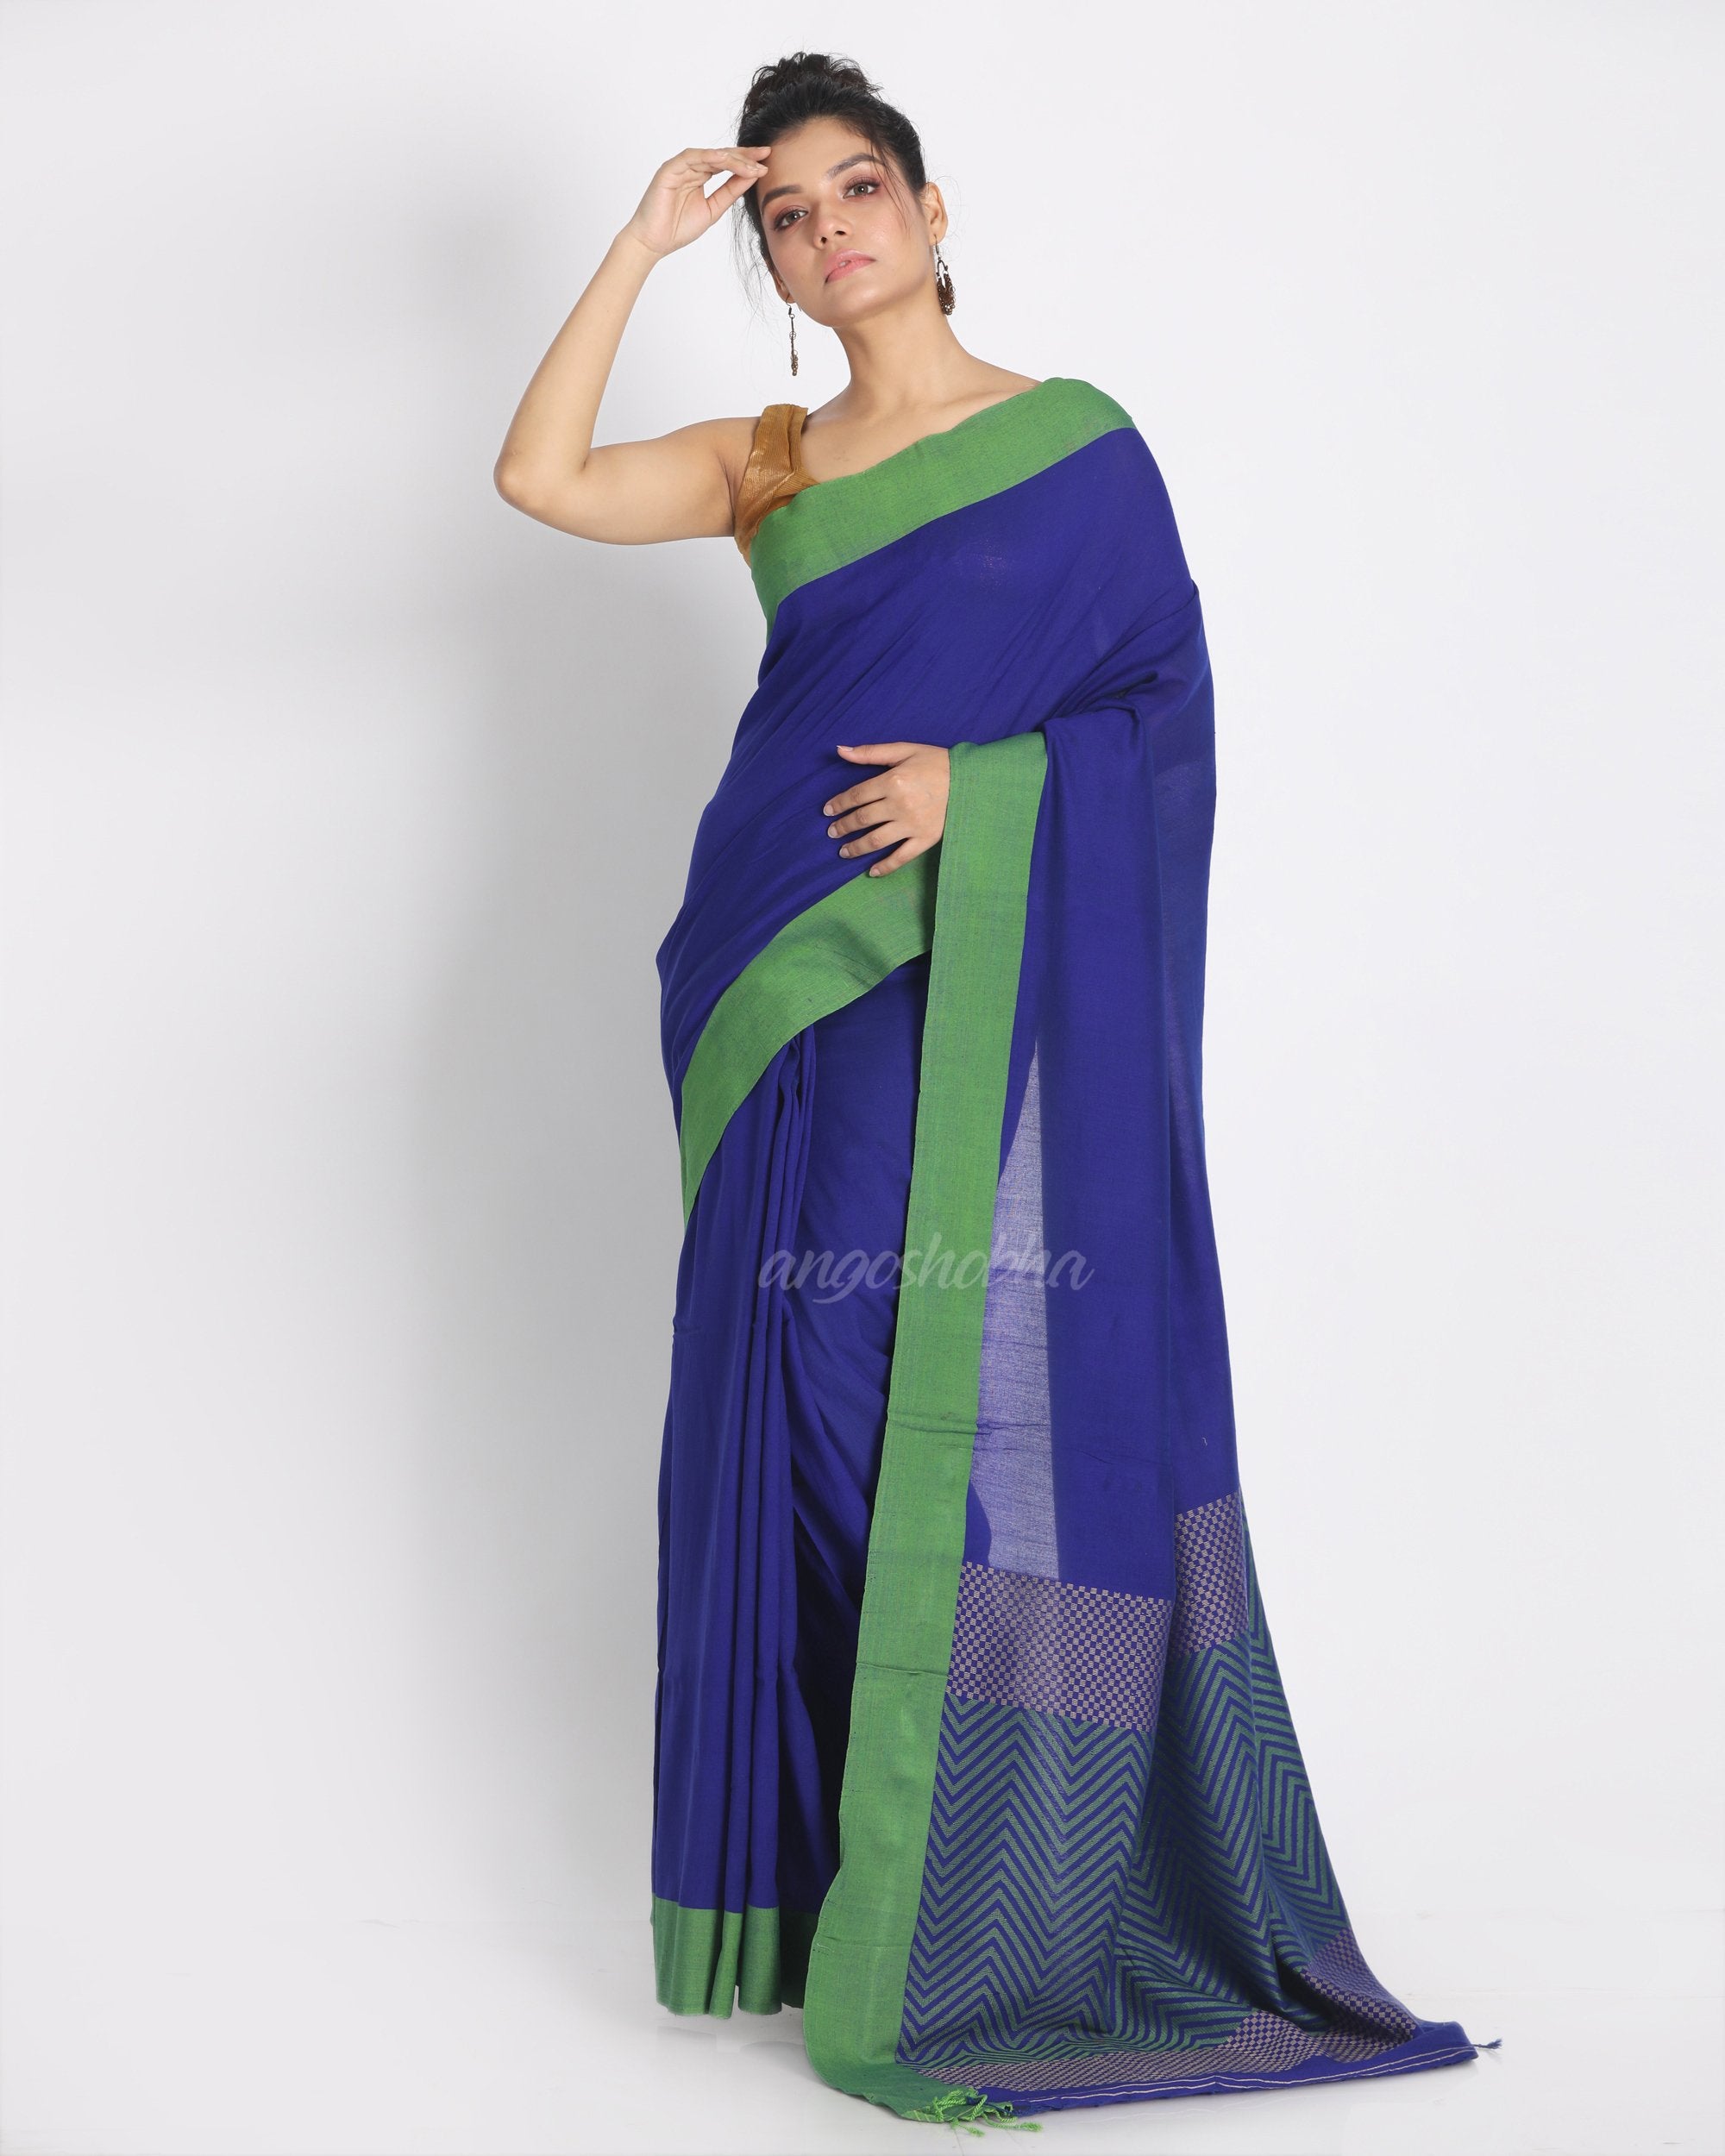 Women's Bengal blue handwoven mulmul cotton saree - Angoshobha